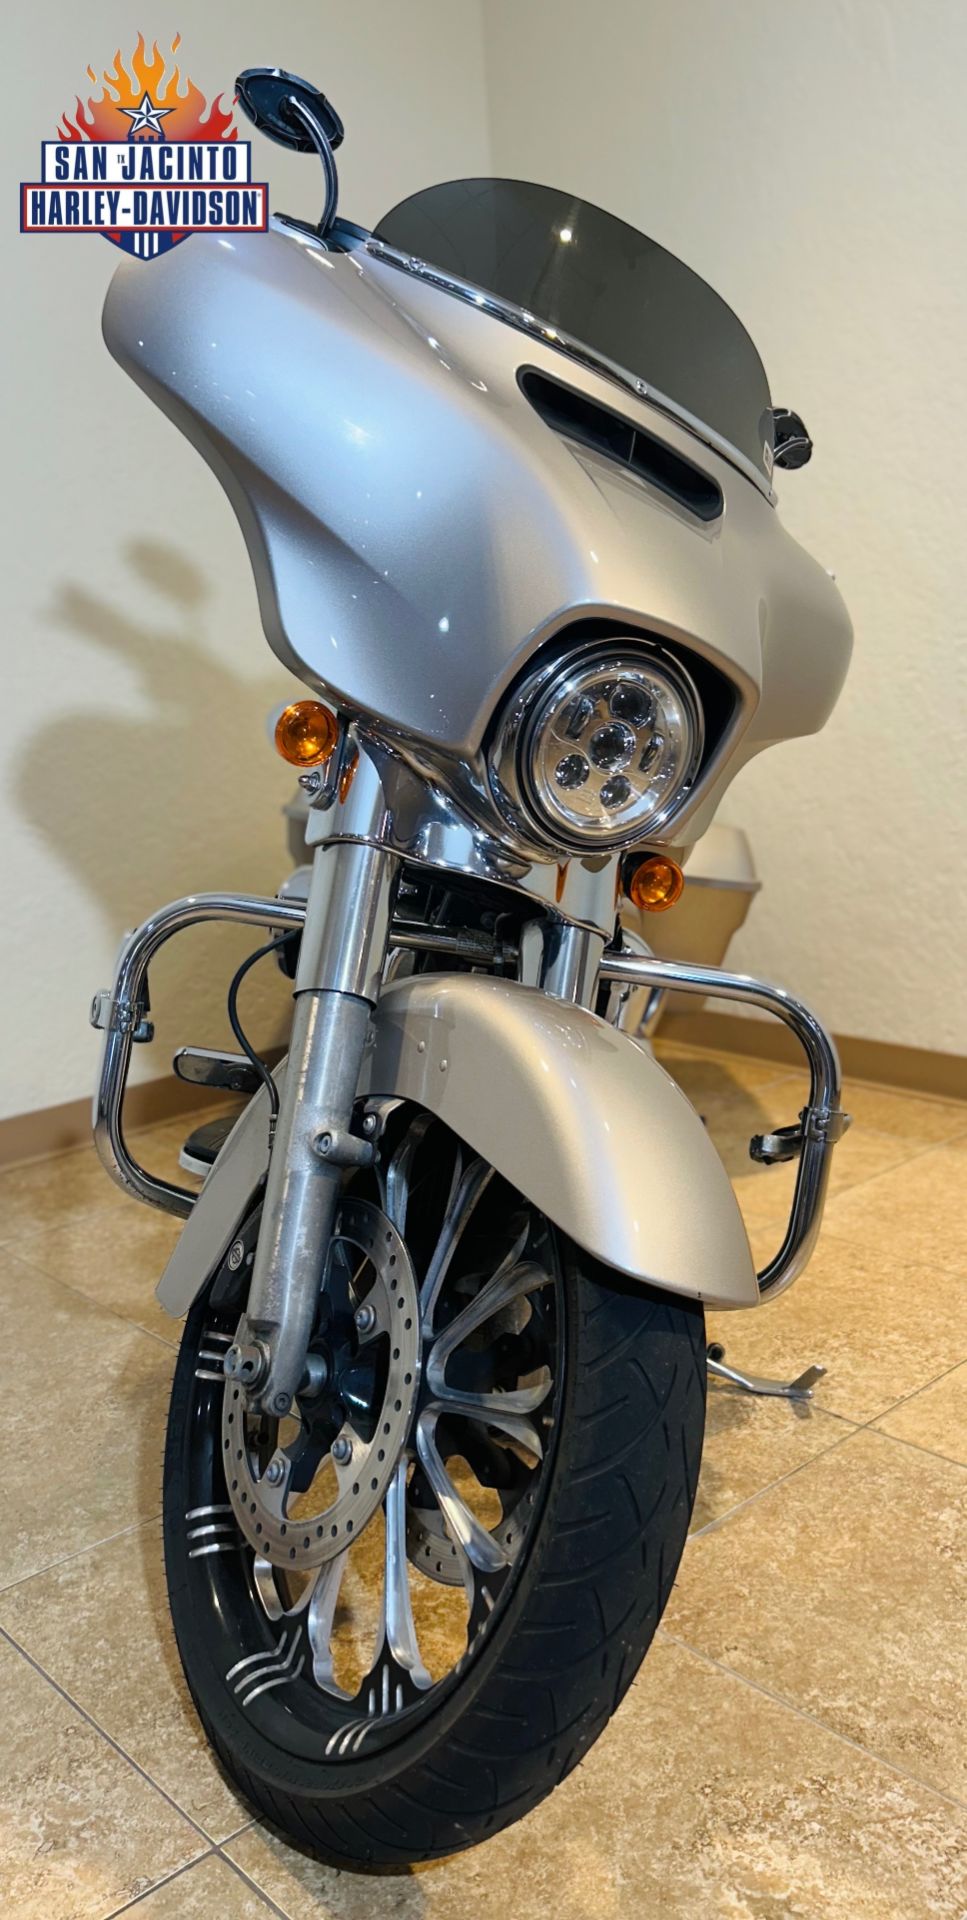 2018 Harley-Davidson Street Glide® in Pasadena, Texas - Photo 3